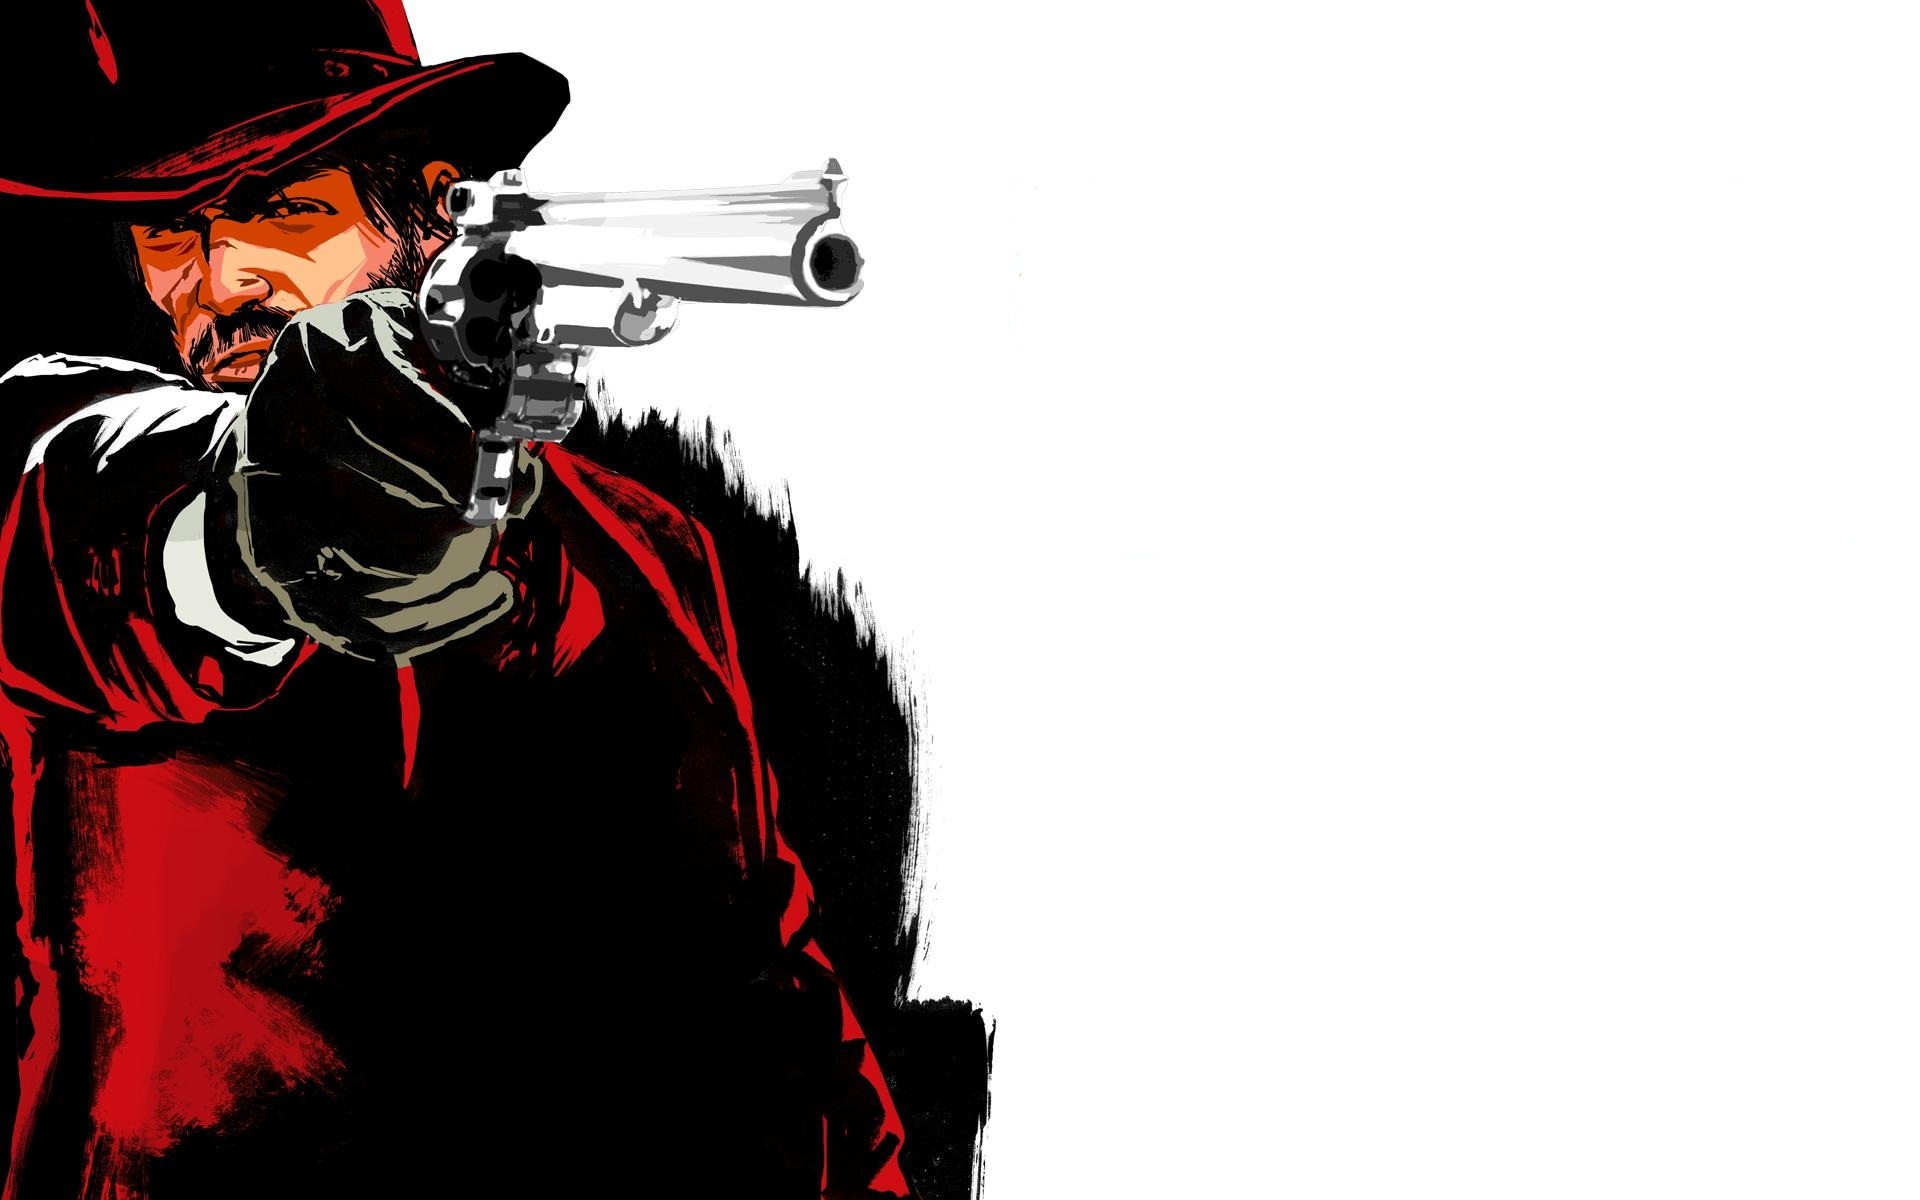 Red Dead Redemption - desktop wallpaper